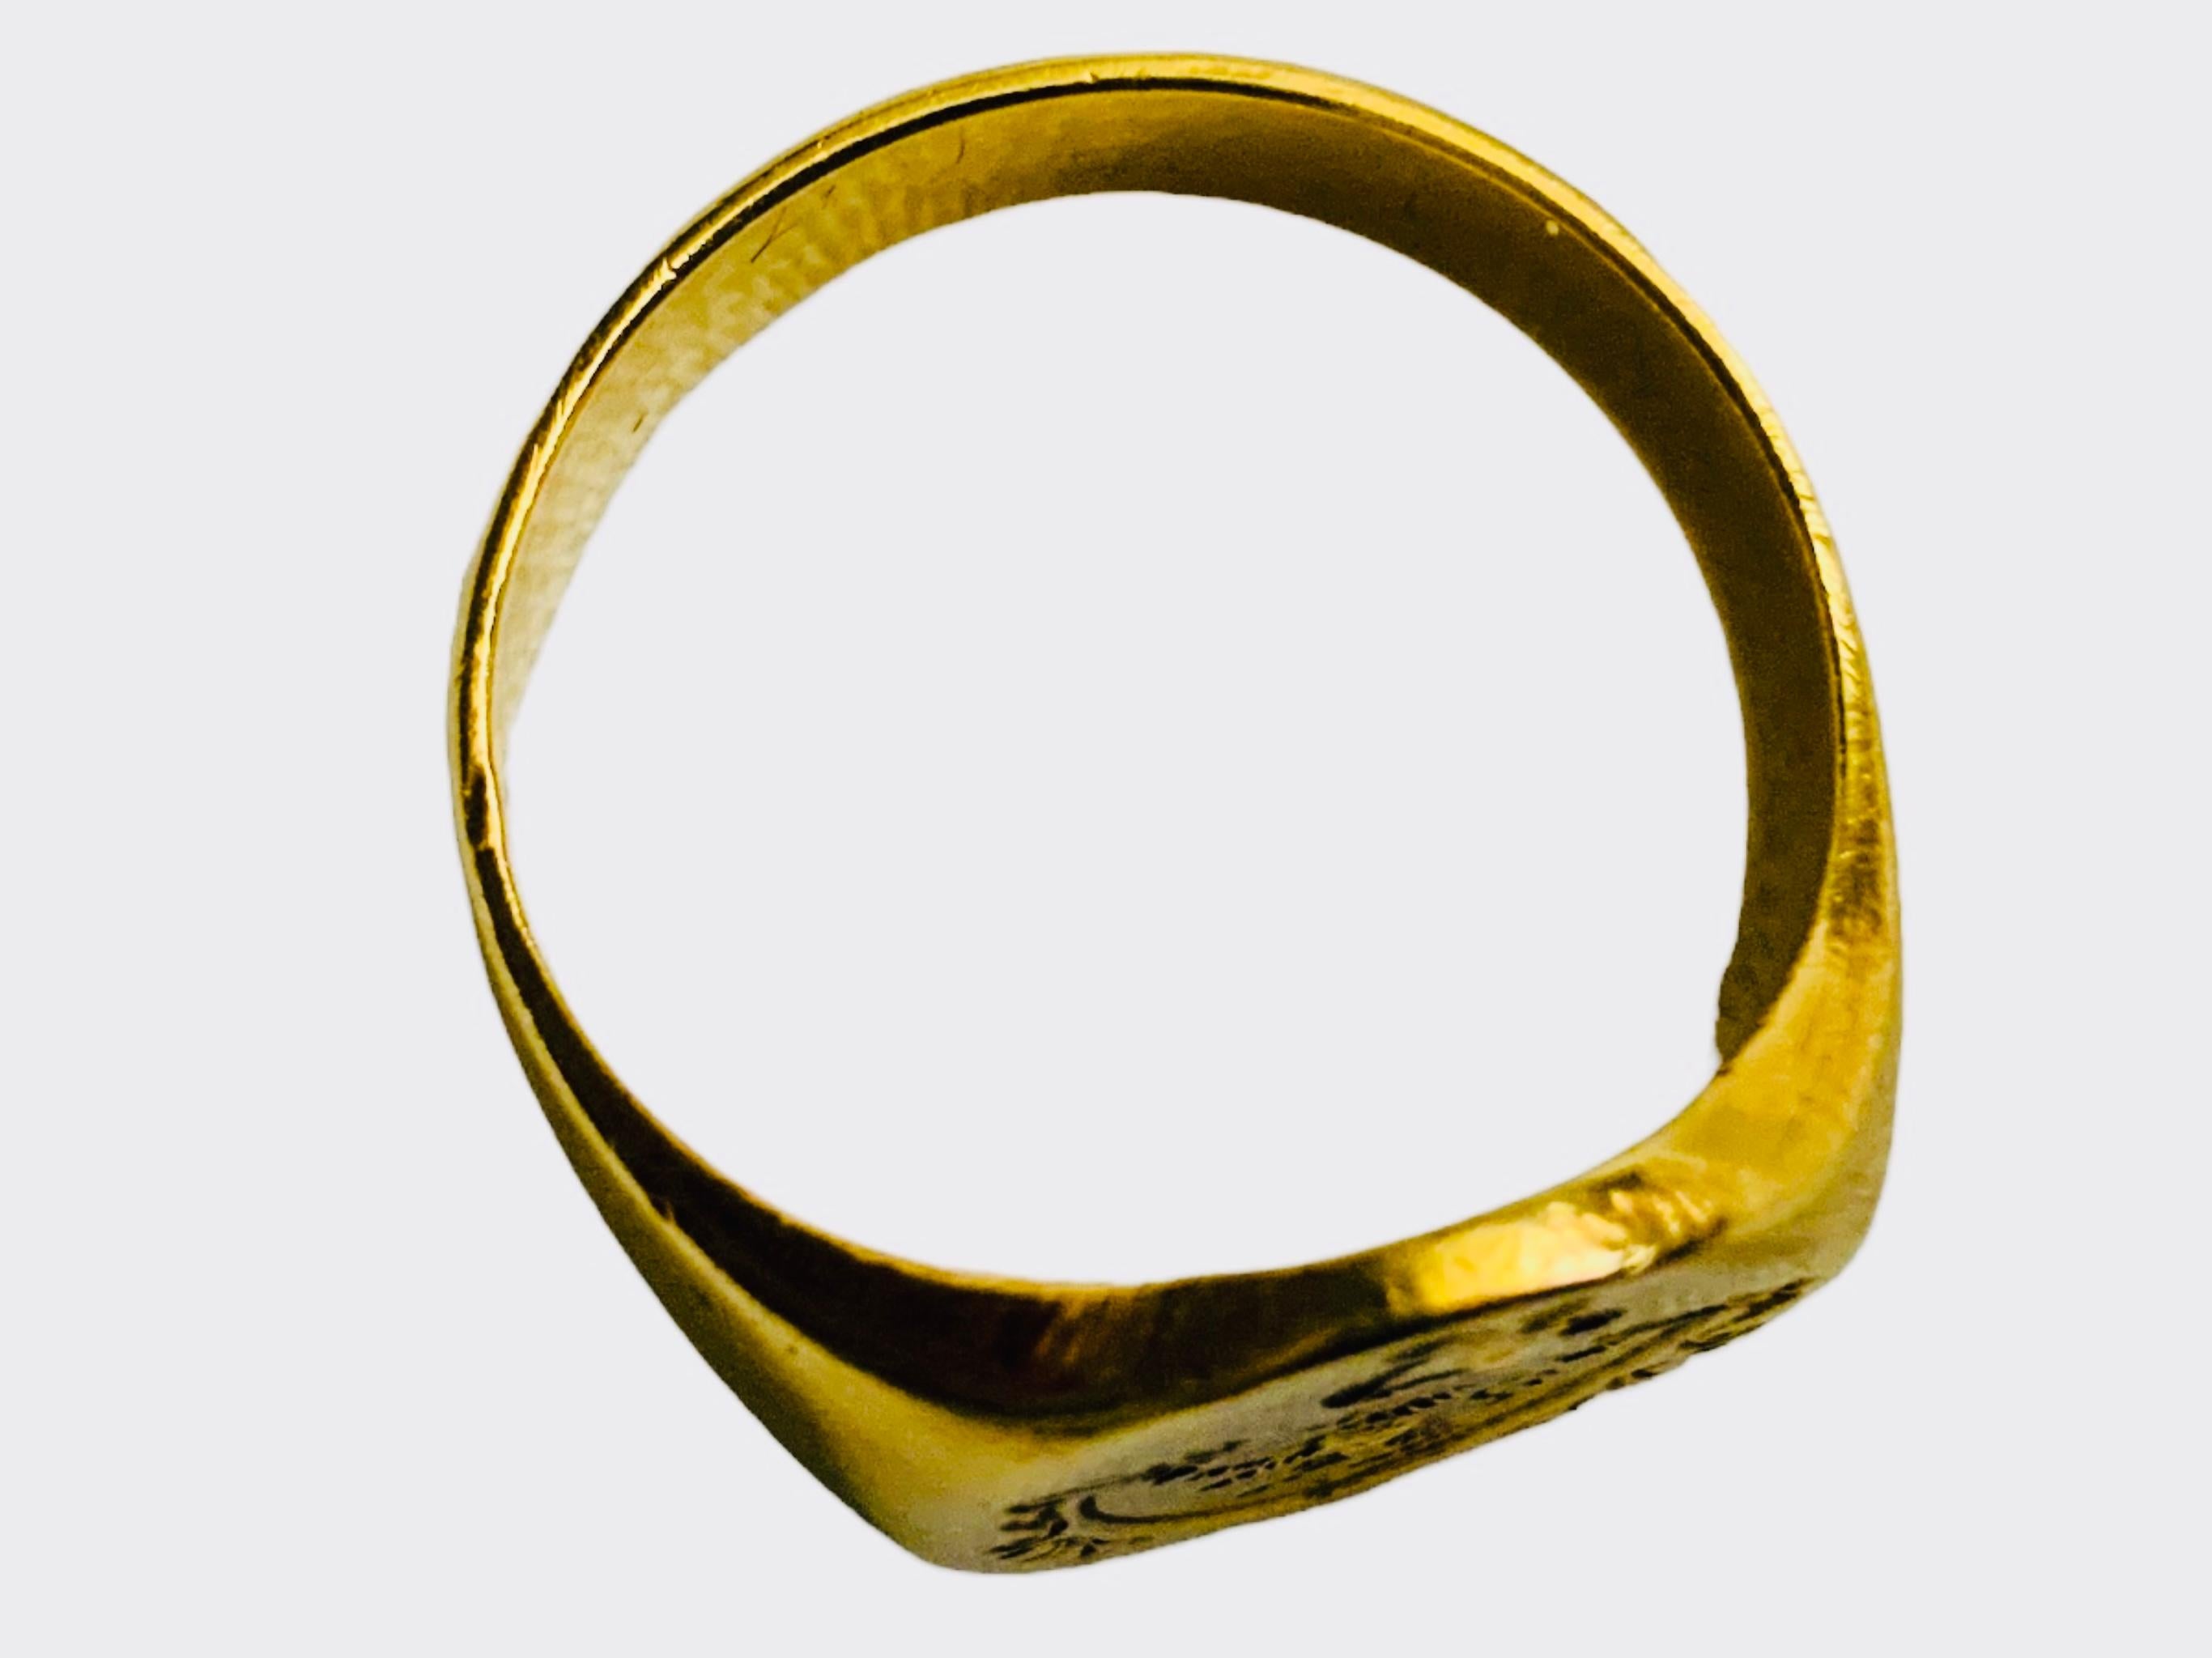 Egyptian Revival 18K Yellow Gold Signet Heraldic Ring